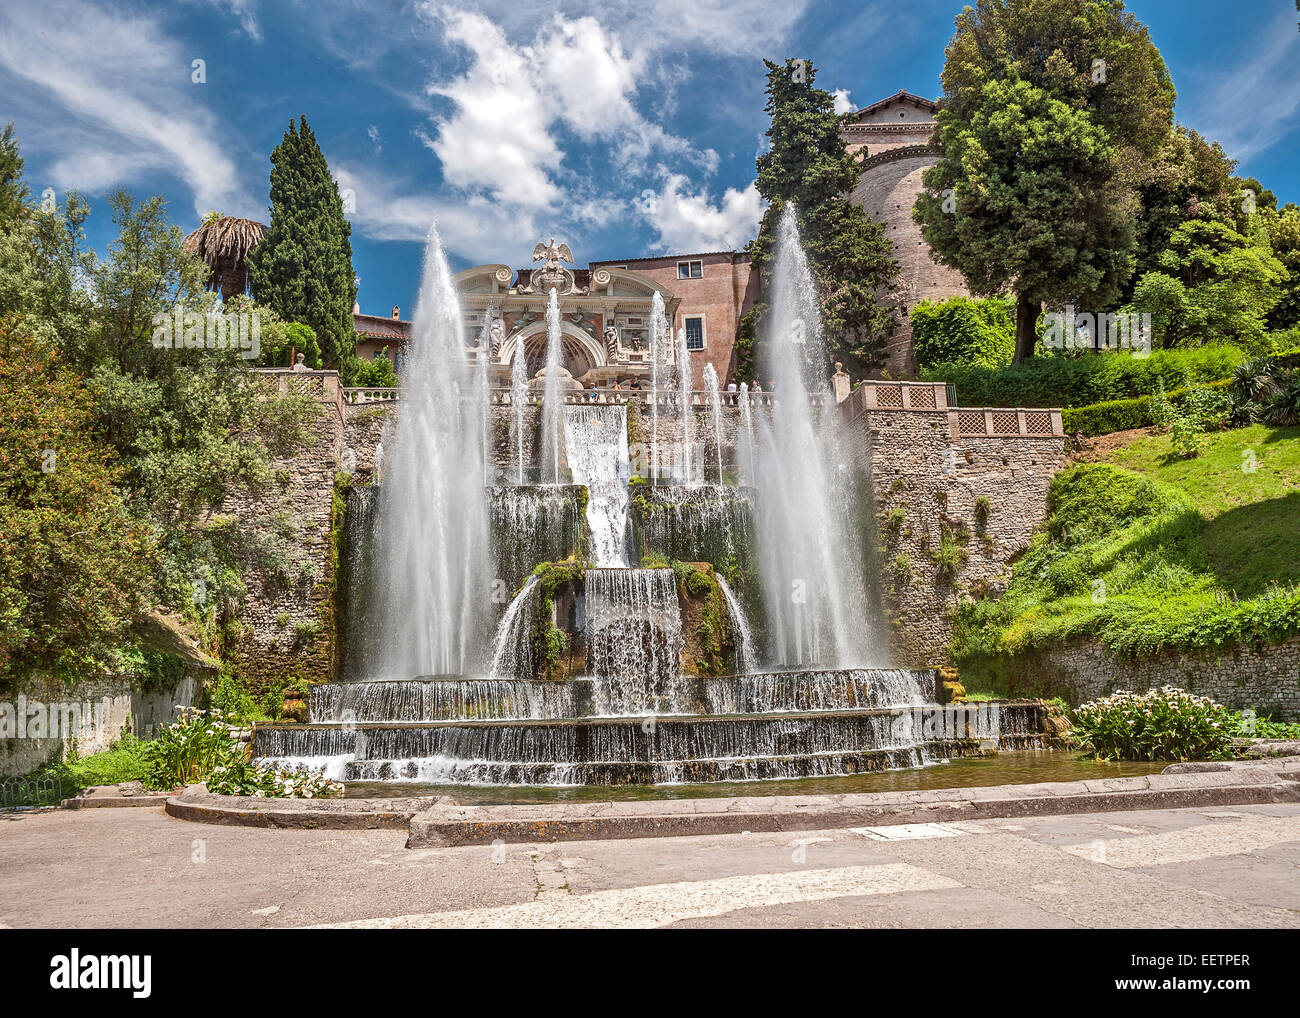 Splendidi giardini e fontane di Tivoli. Foto Stock